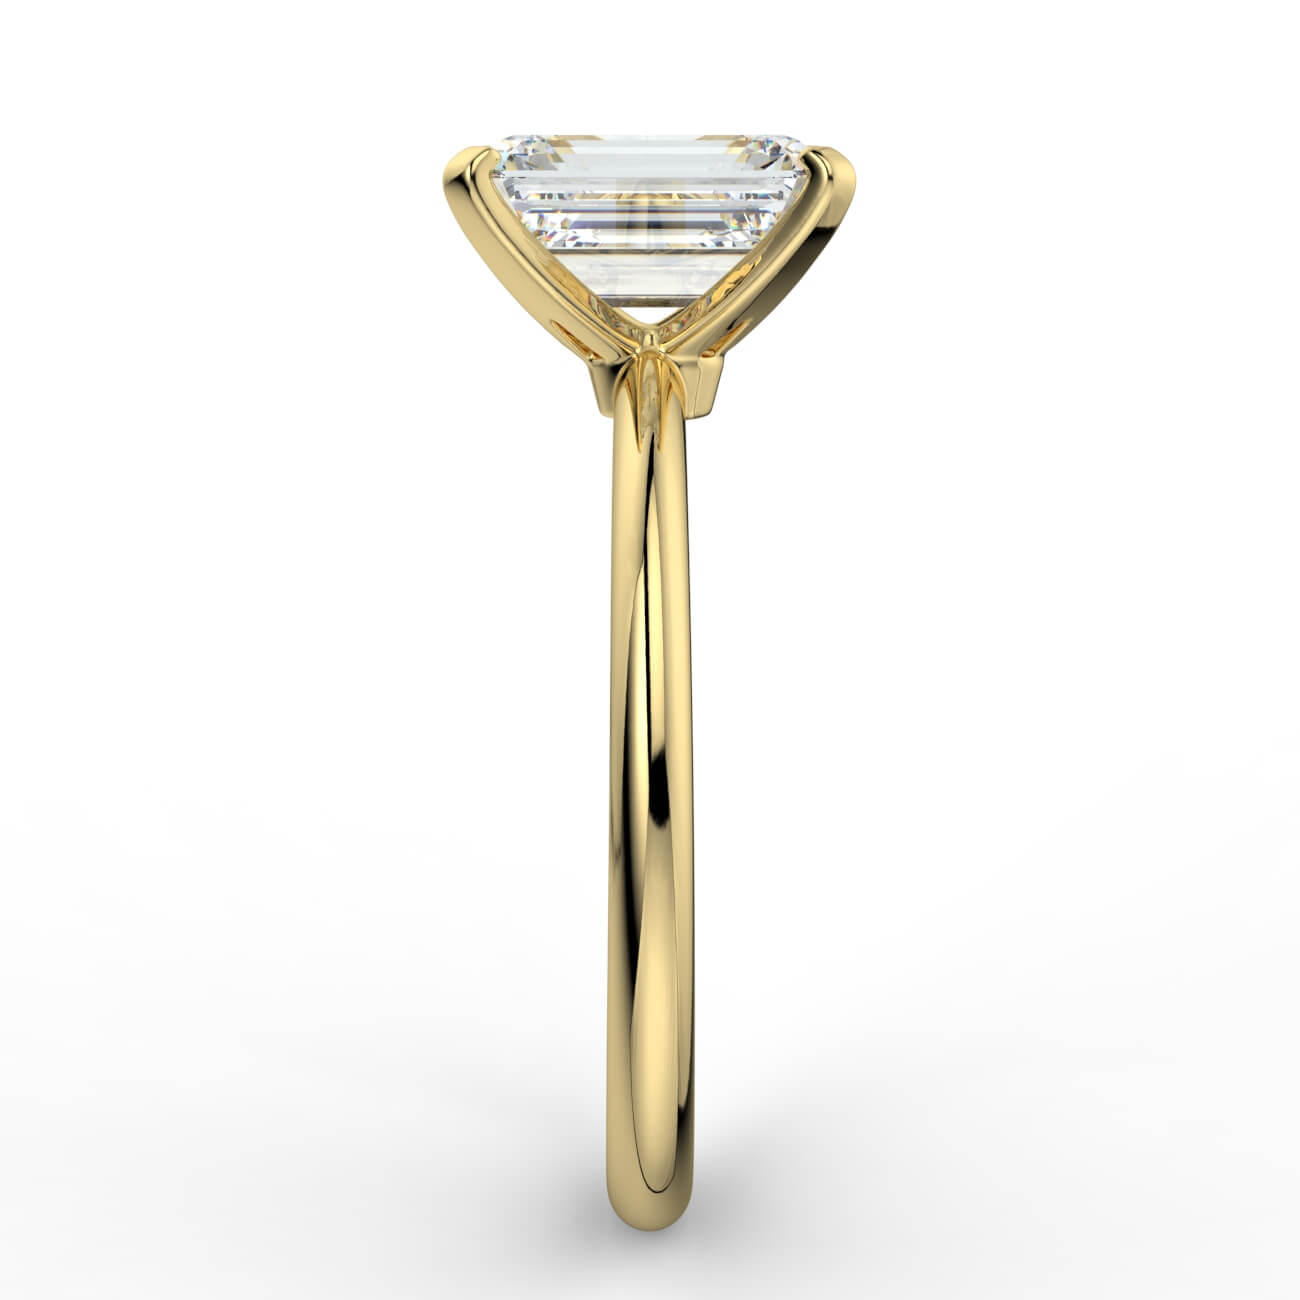 Knife-edge solitaire emerald cut diamond engagement ring in yellow gold – Australian Diamond Network